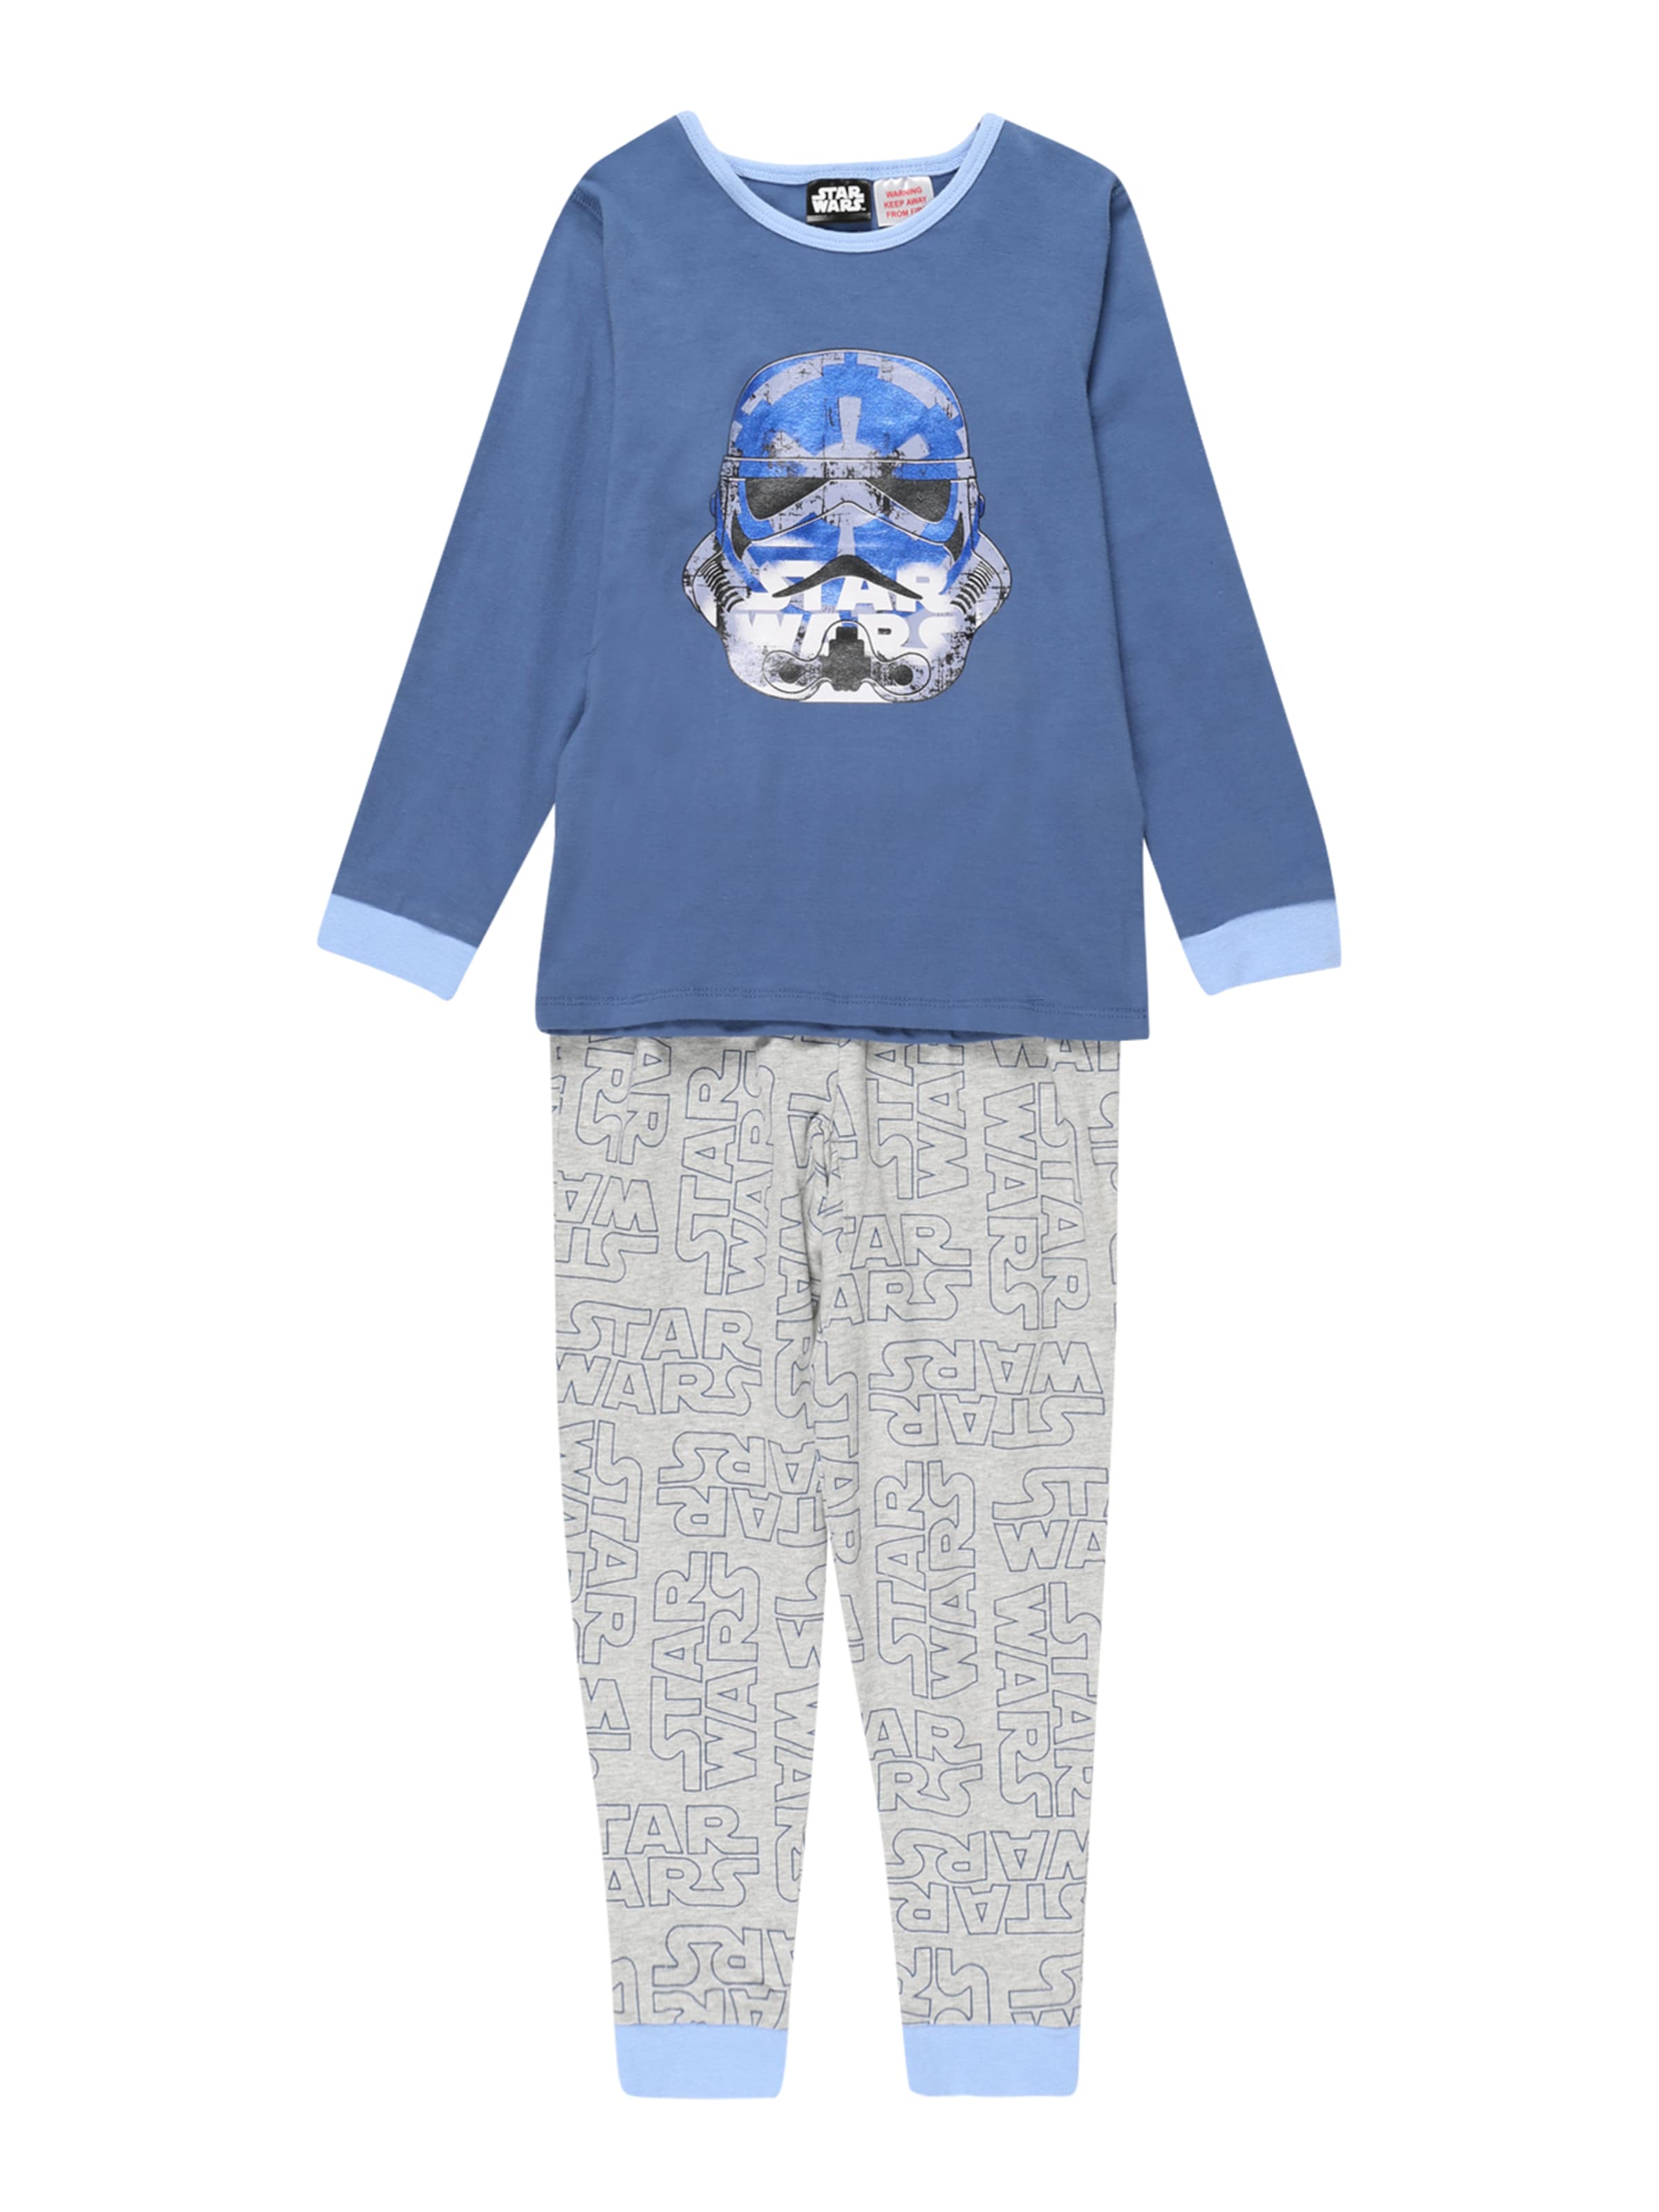 Enfants Pyjama ORLANDO Cotton On en Gris Clair, Bleu, Bleu Clair 